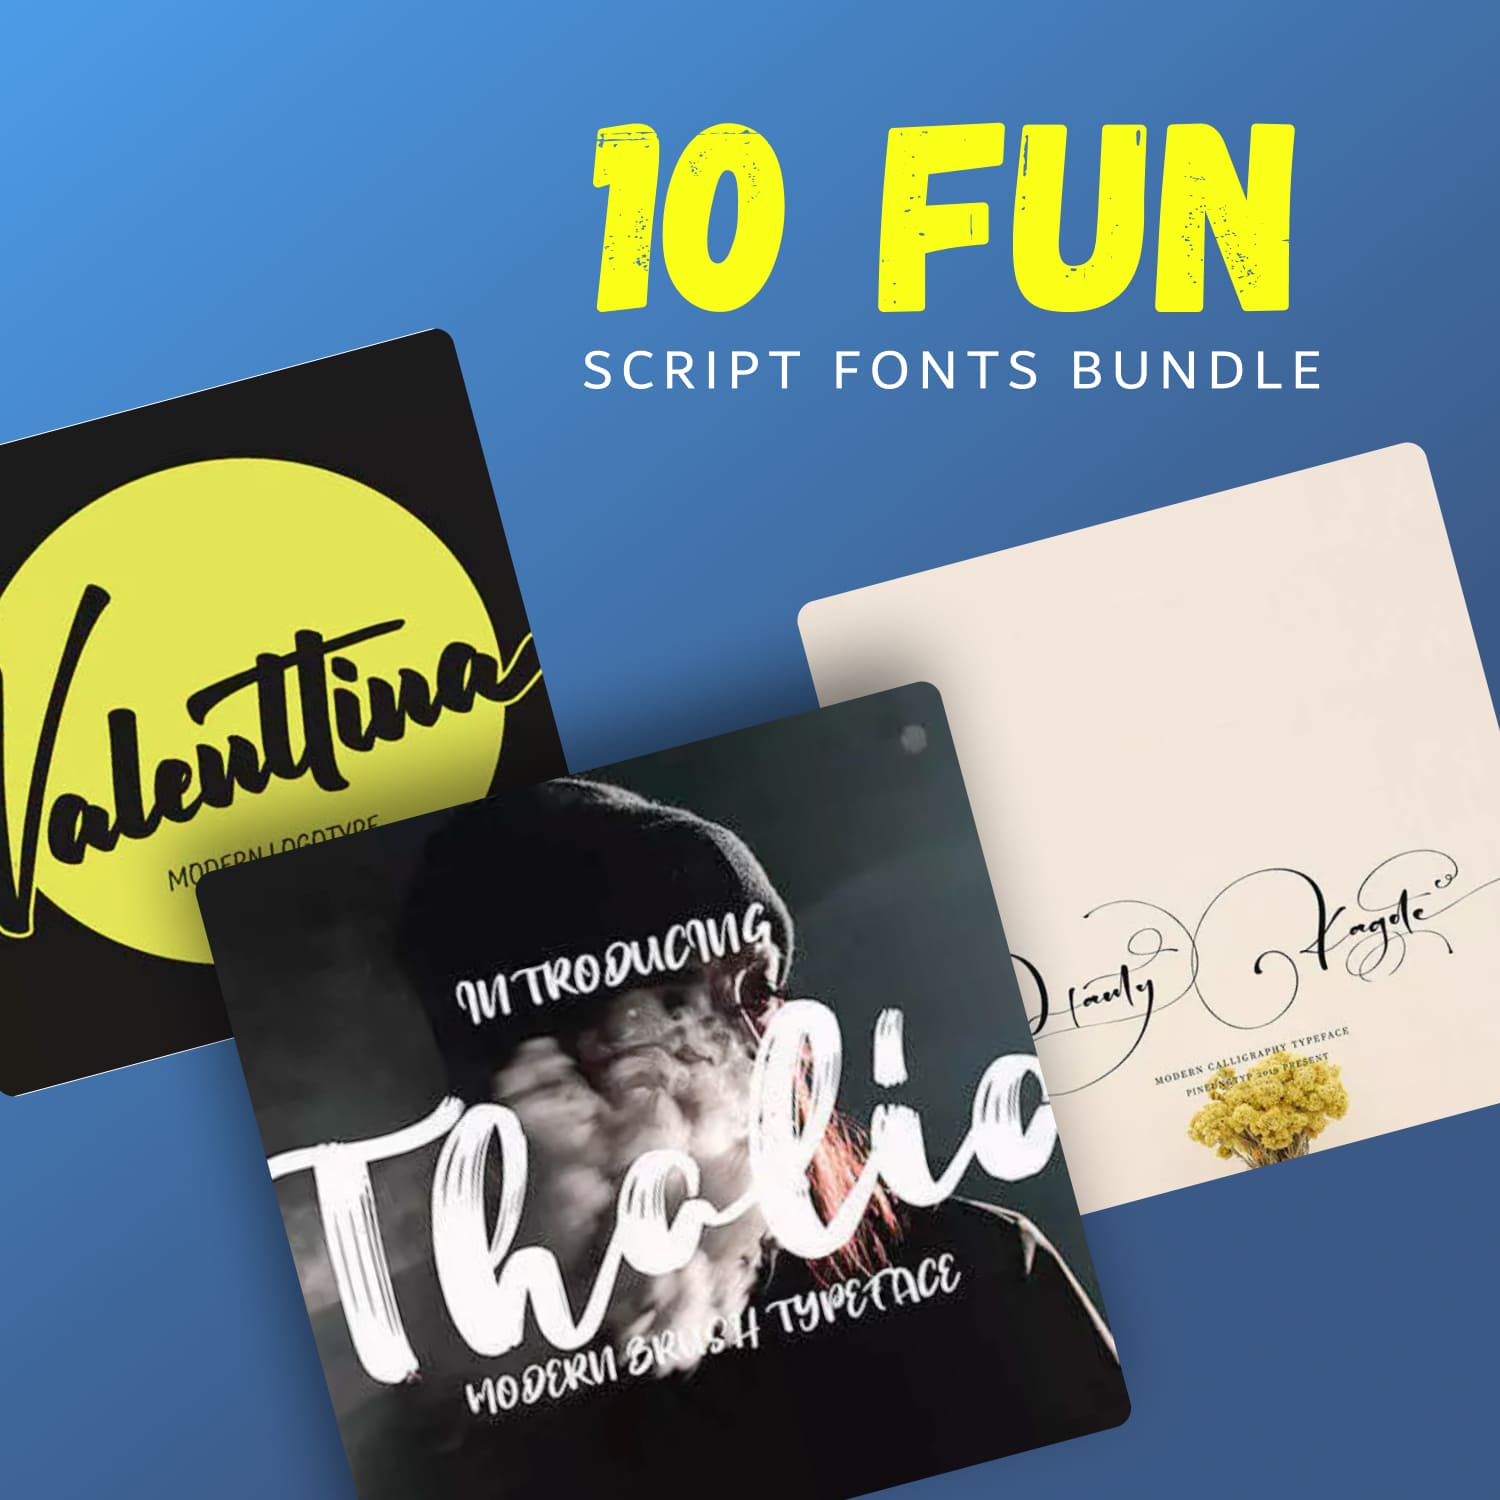 10 fun script fonts bundle.